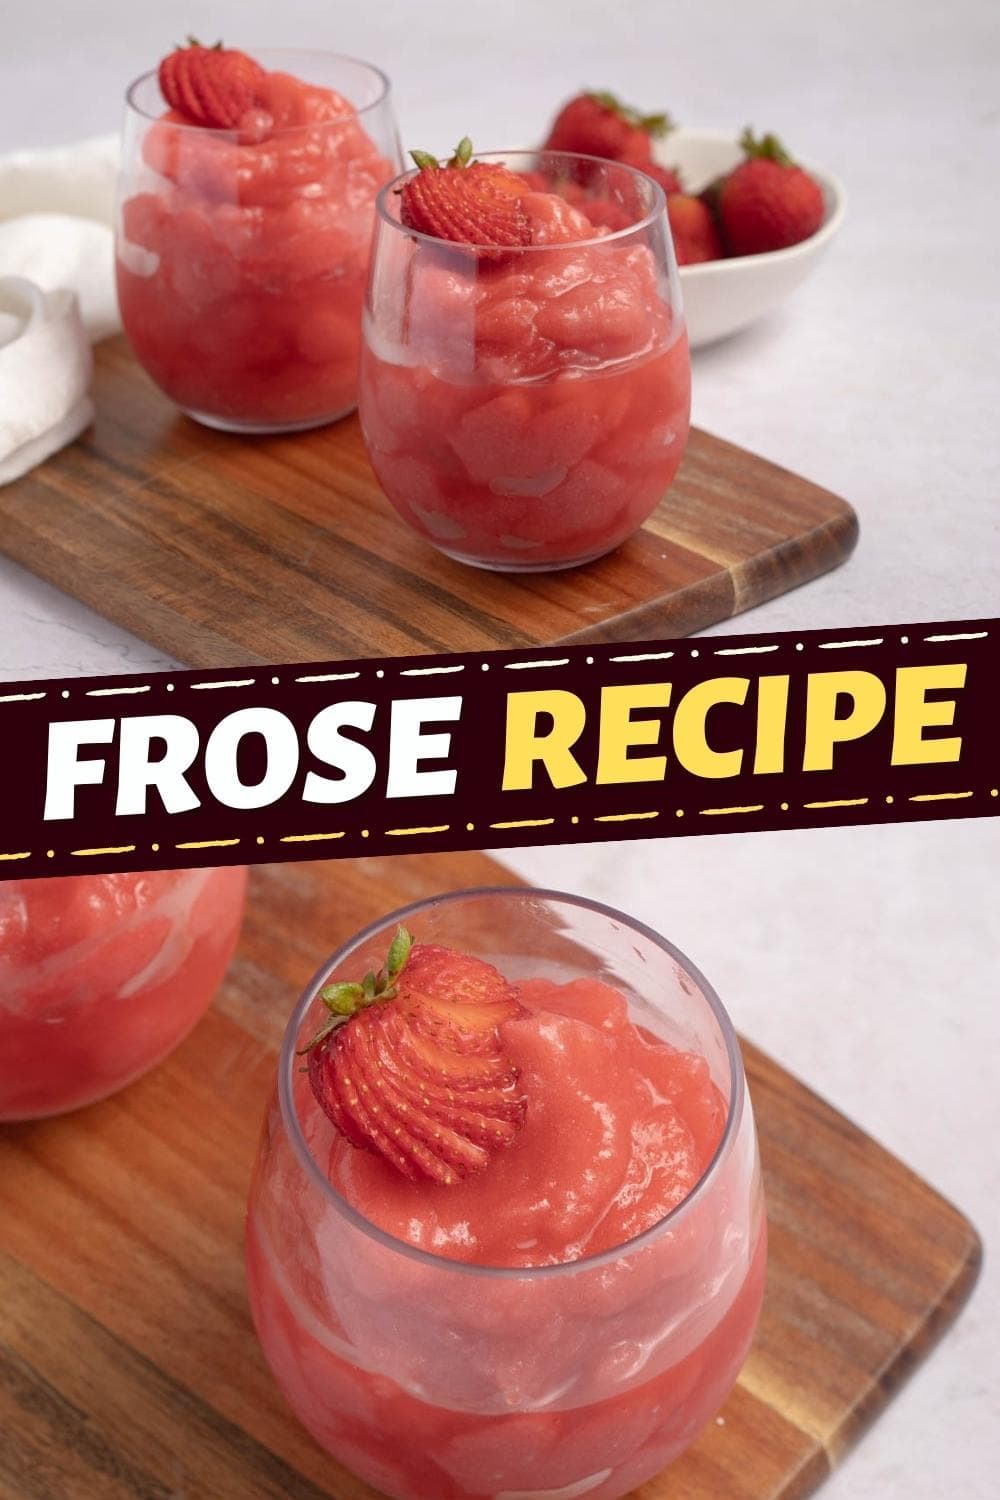 Frost recipe